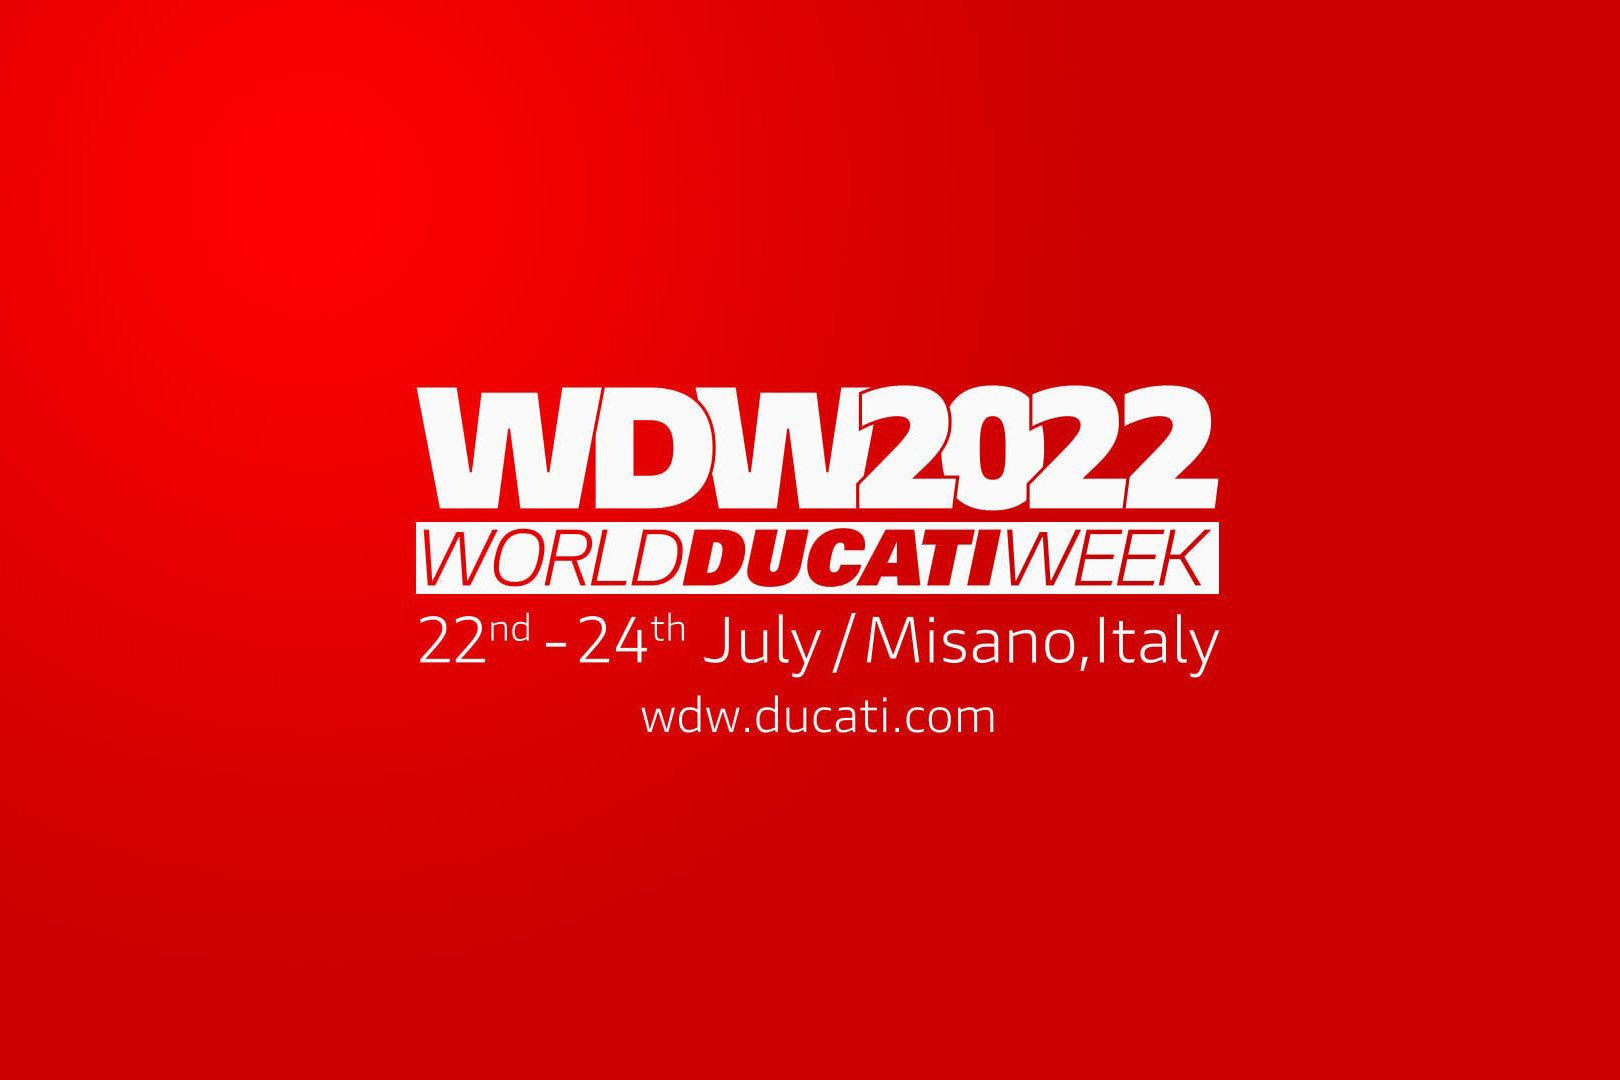 World Ducati Week 2022: Let's Ride as One